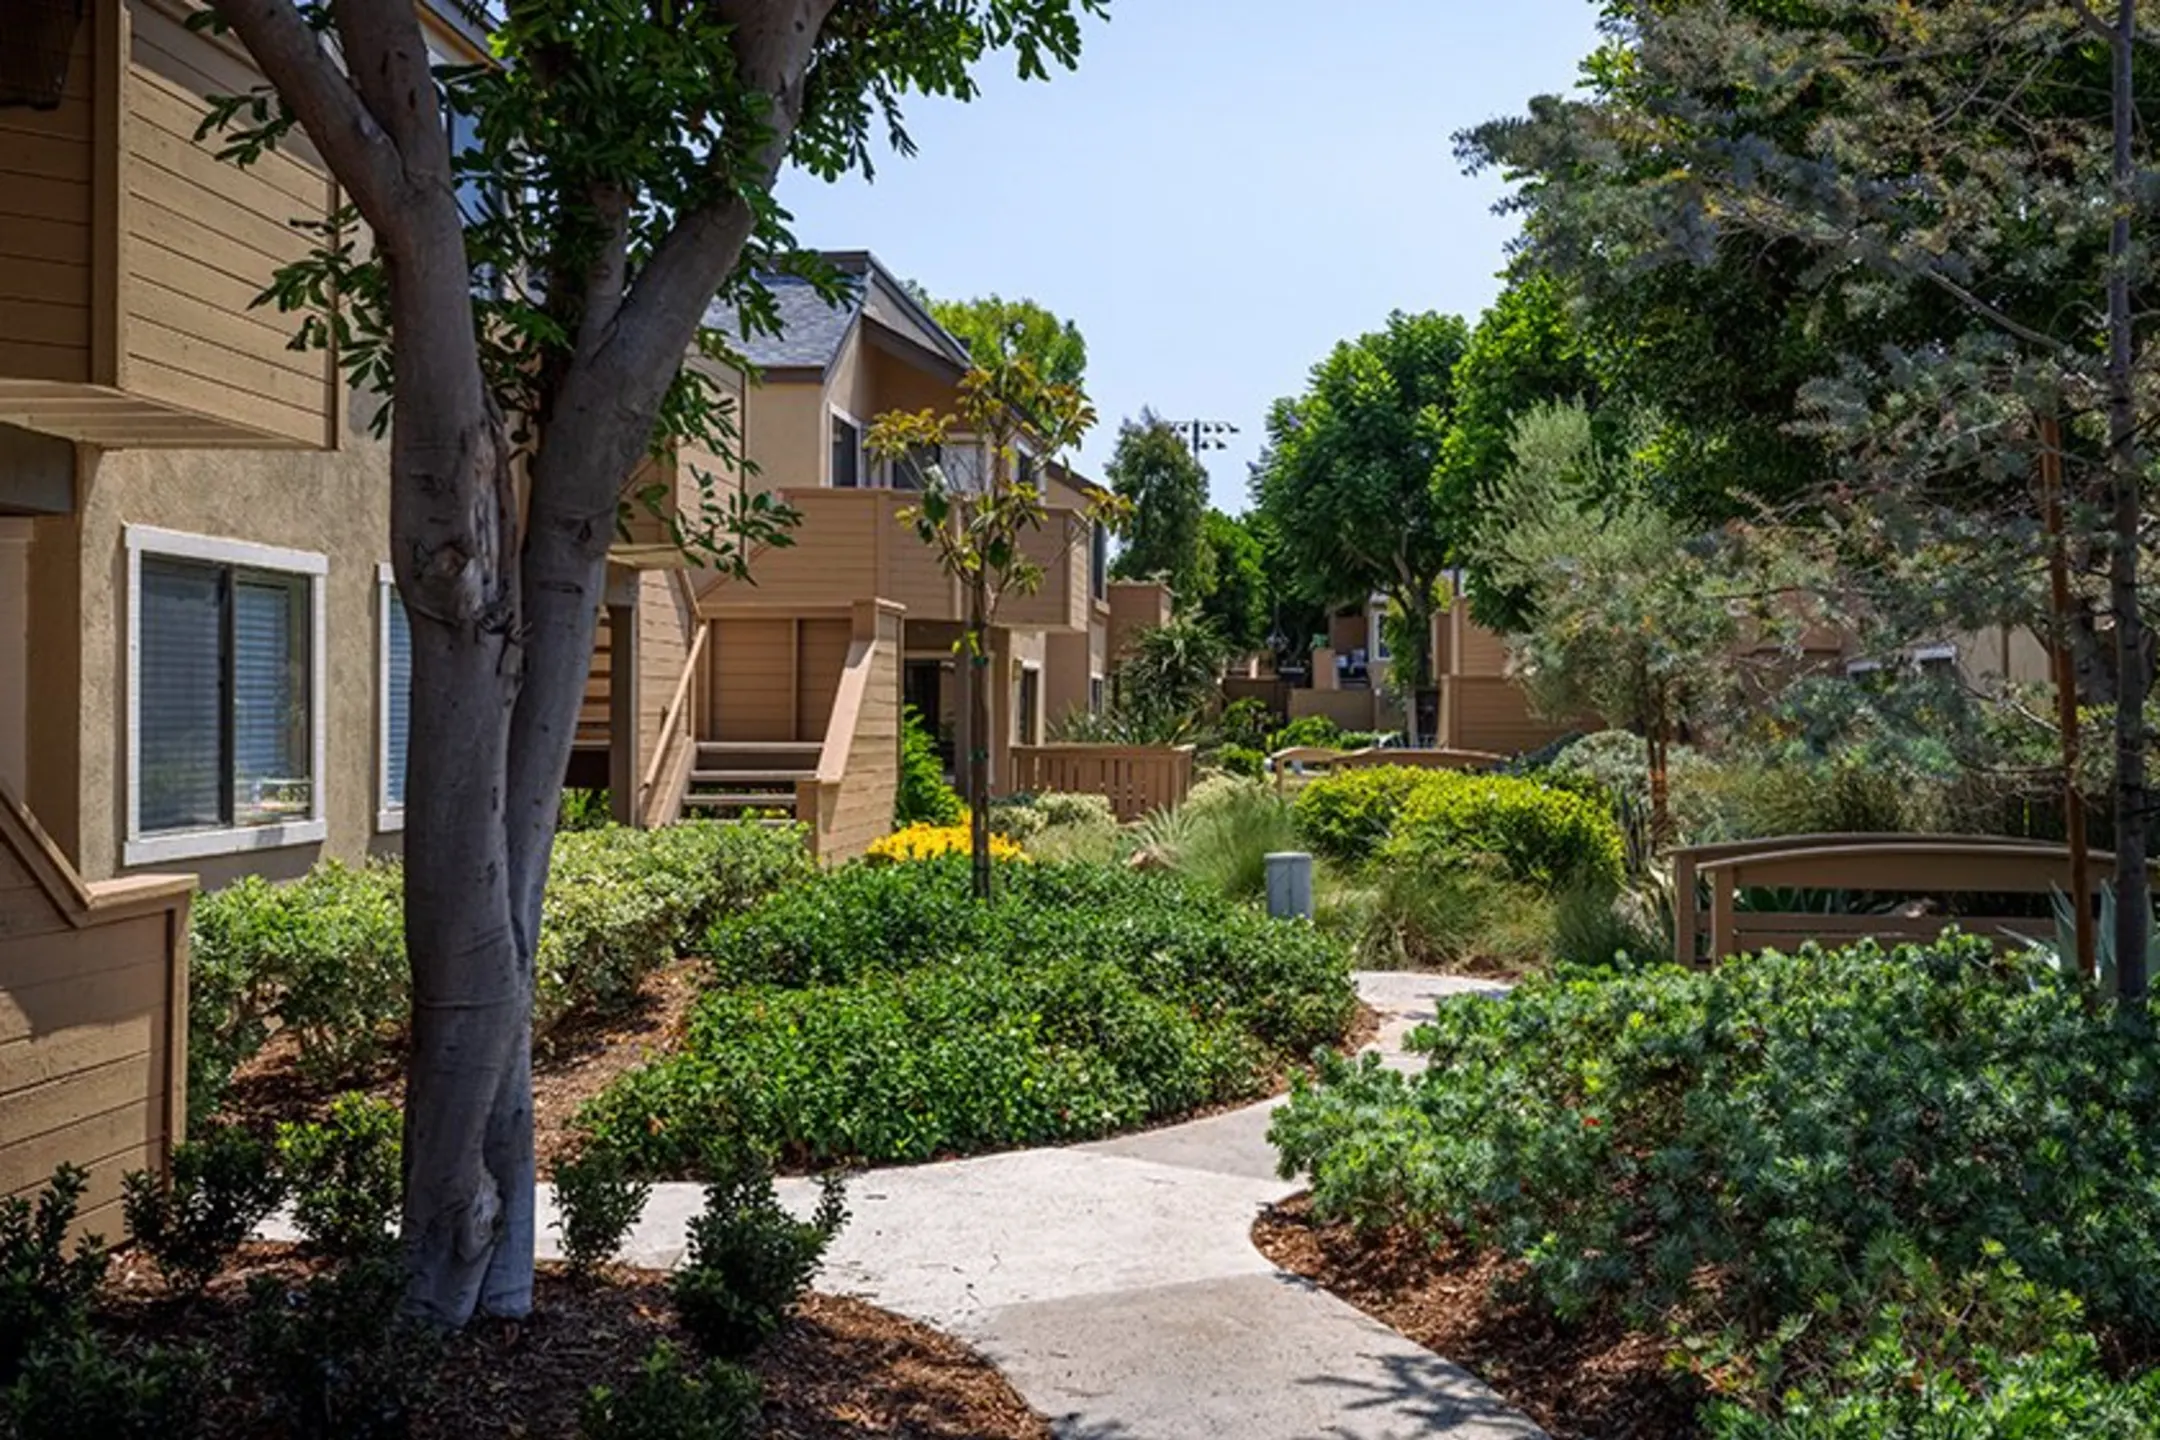 Building - Woodbridge Apartments - Irvine, CA